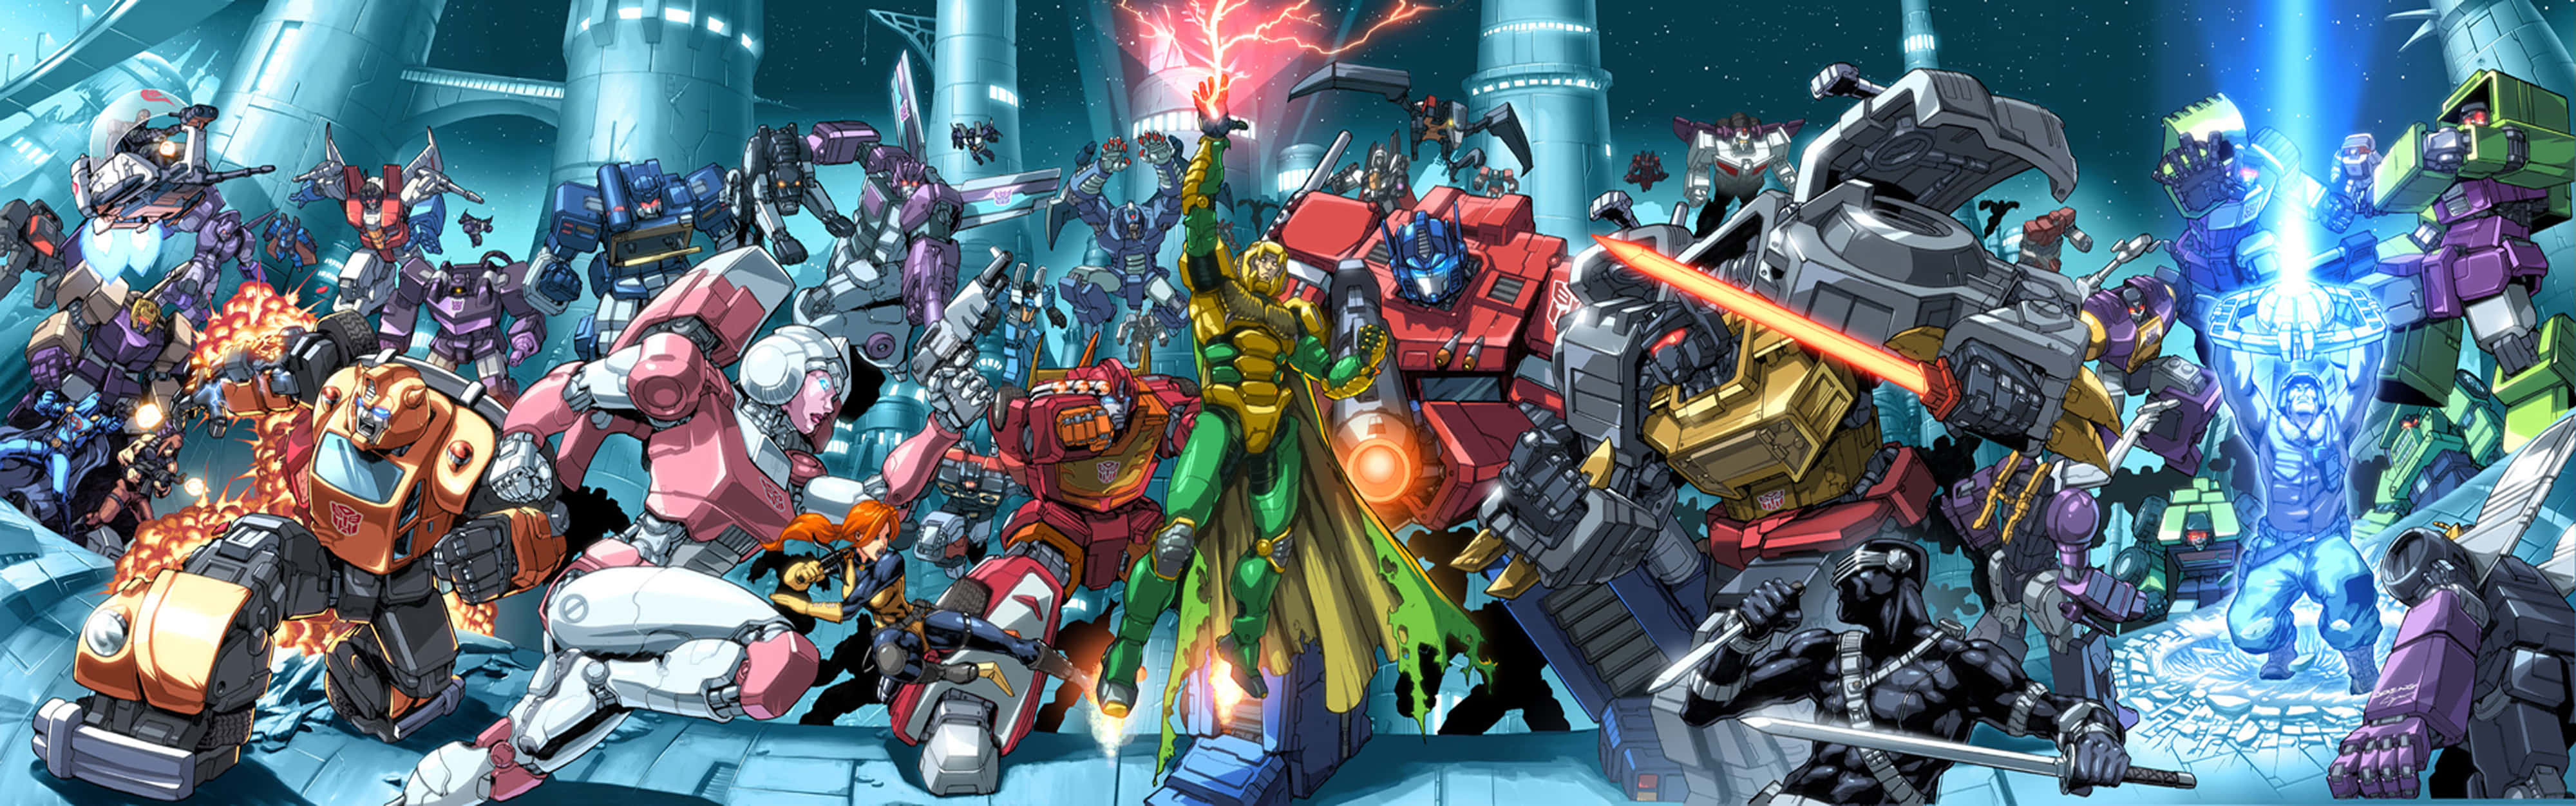 Transformers - The Movie - Wallpaper Wallpaper